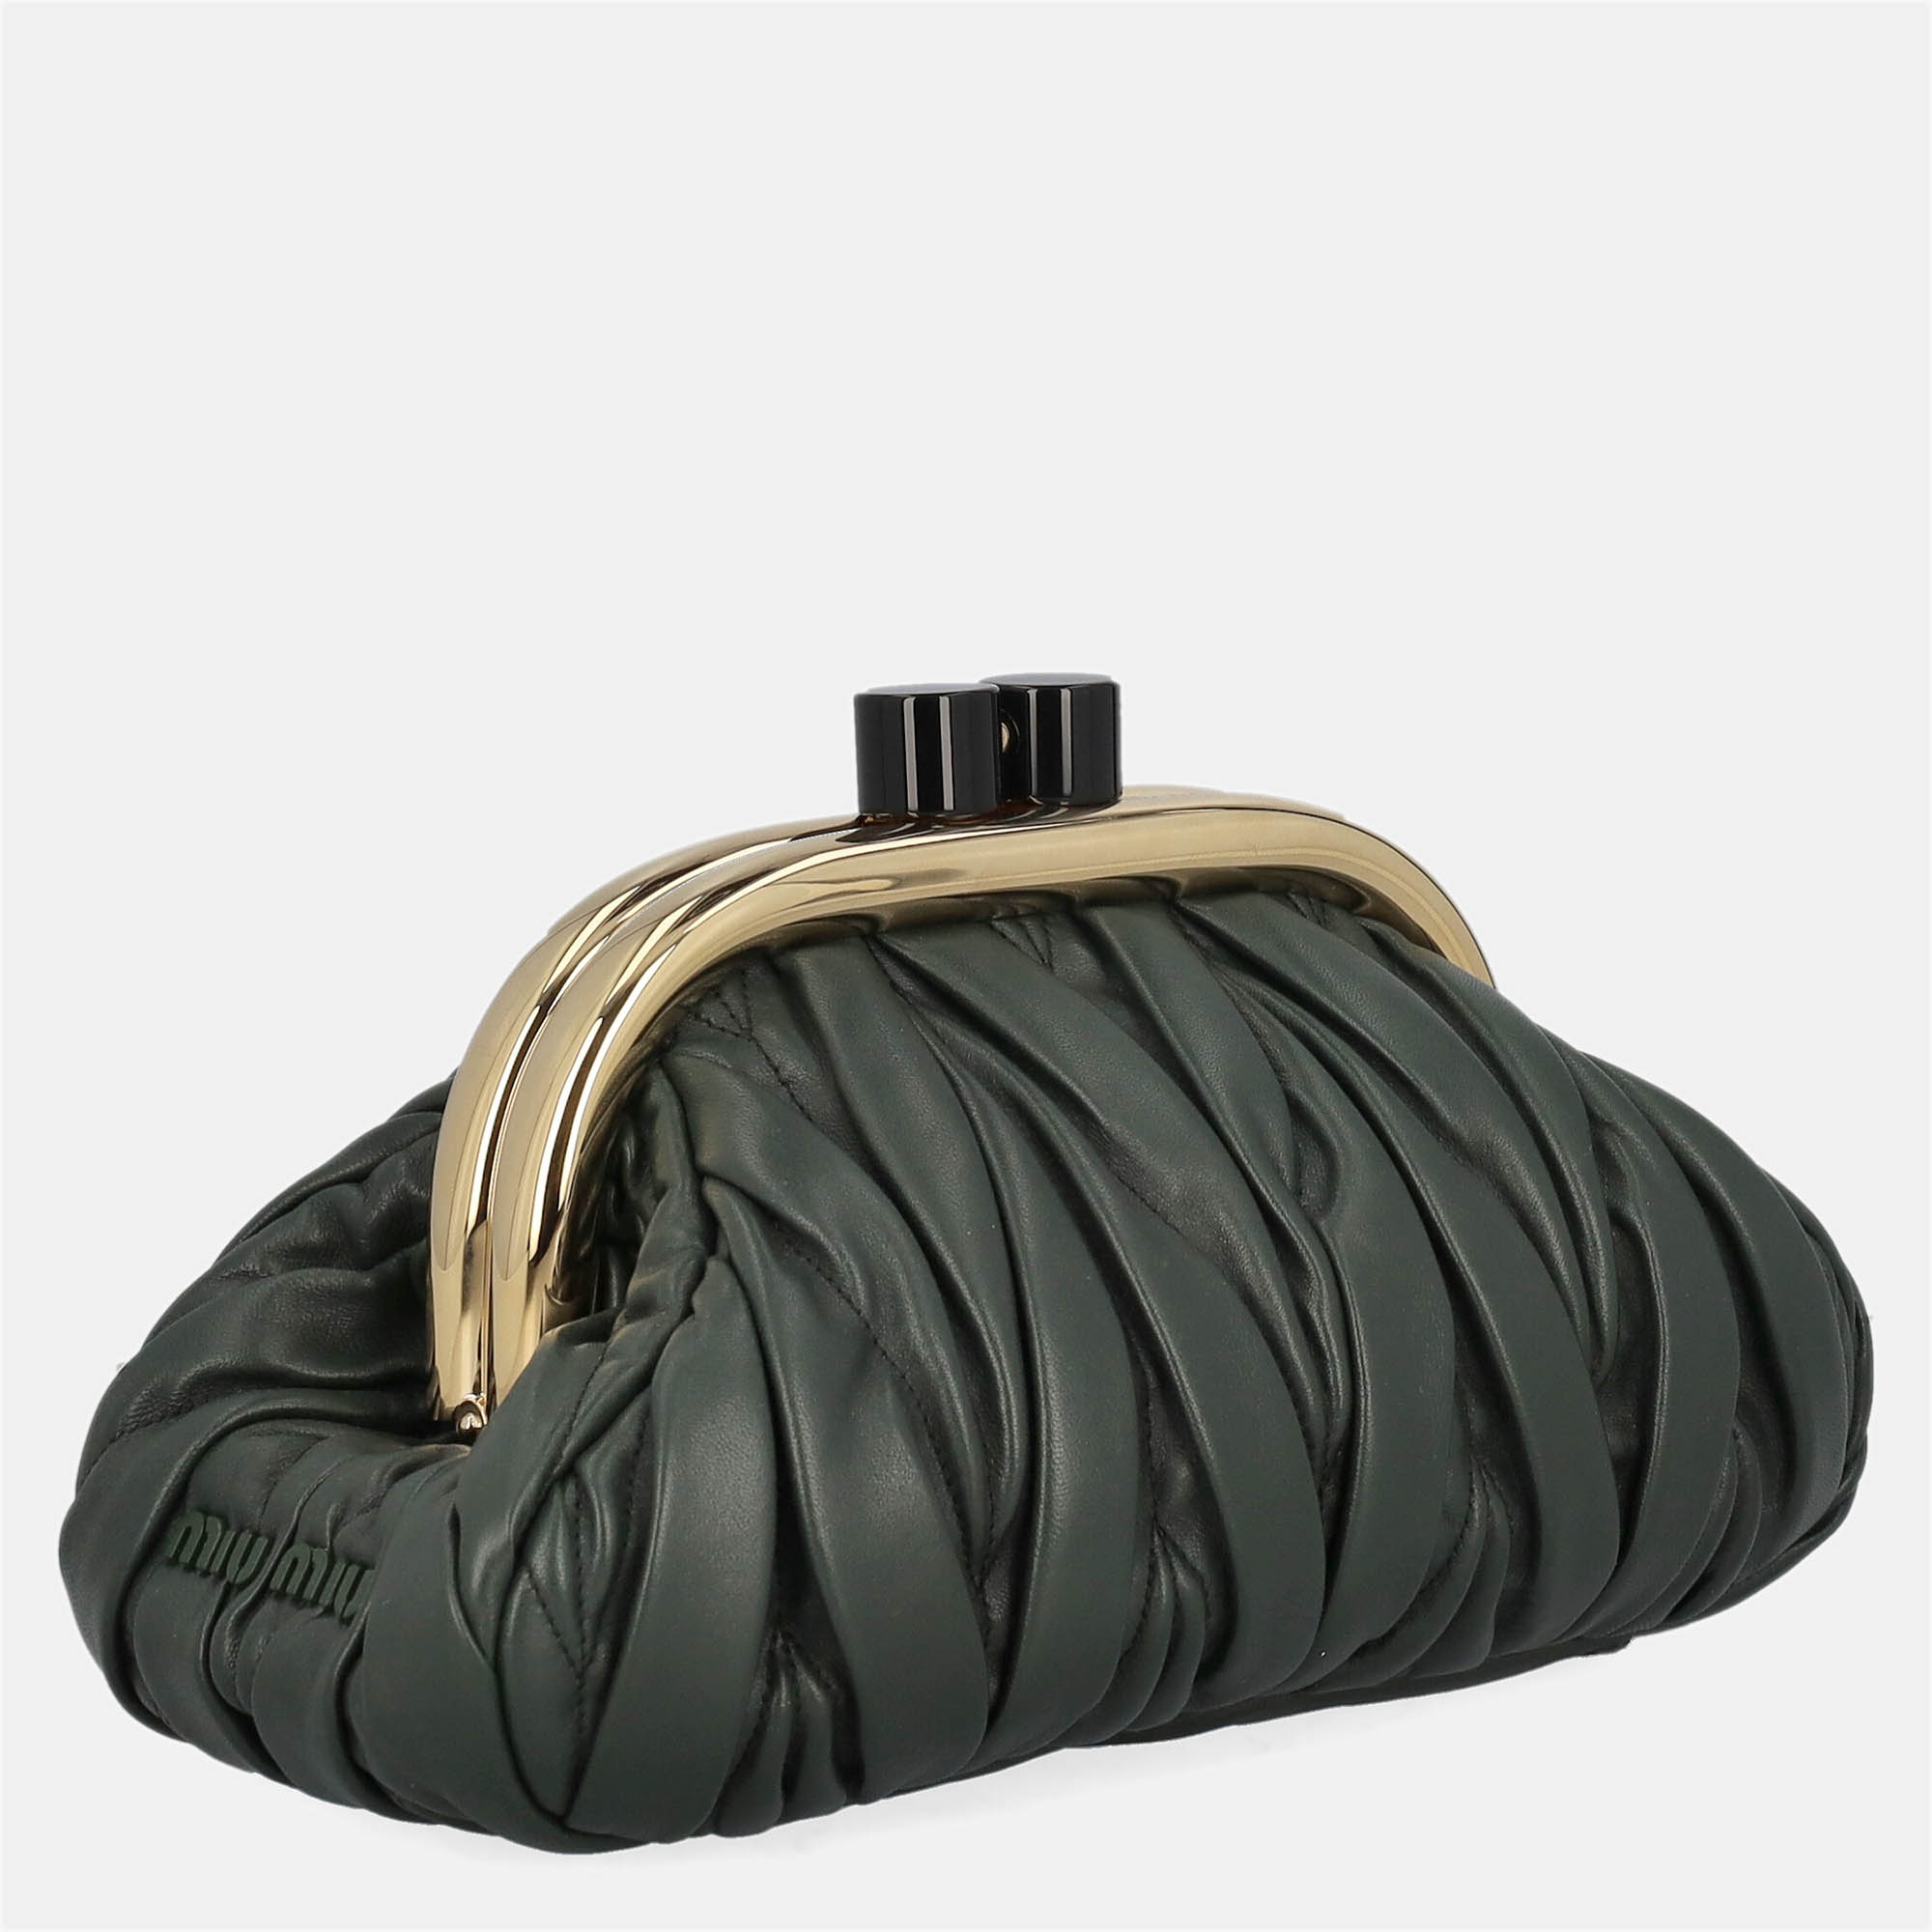 Miu Miu  Women's Leather Clutch Bag - Green - One Size